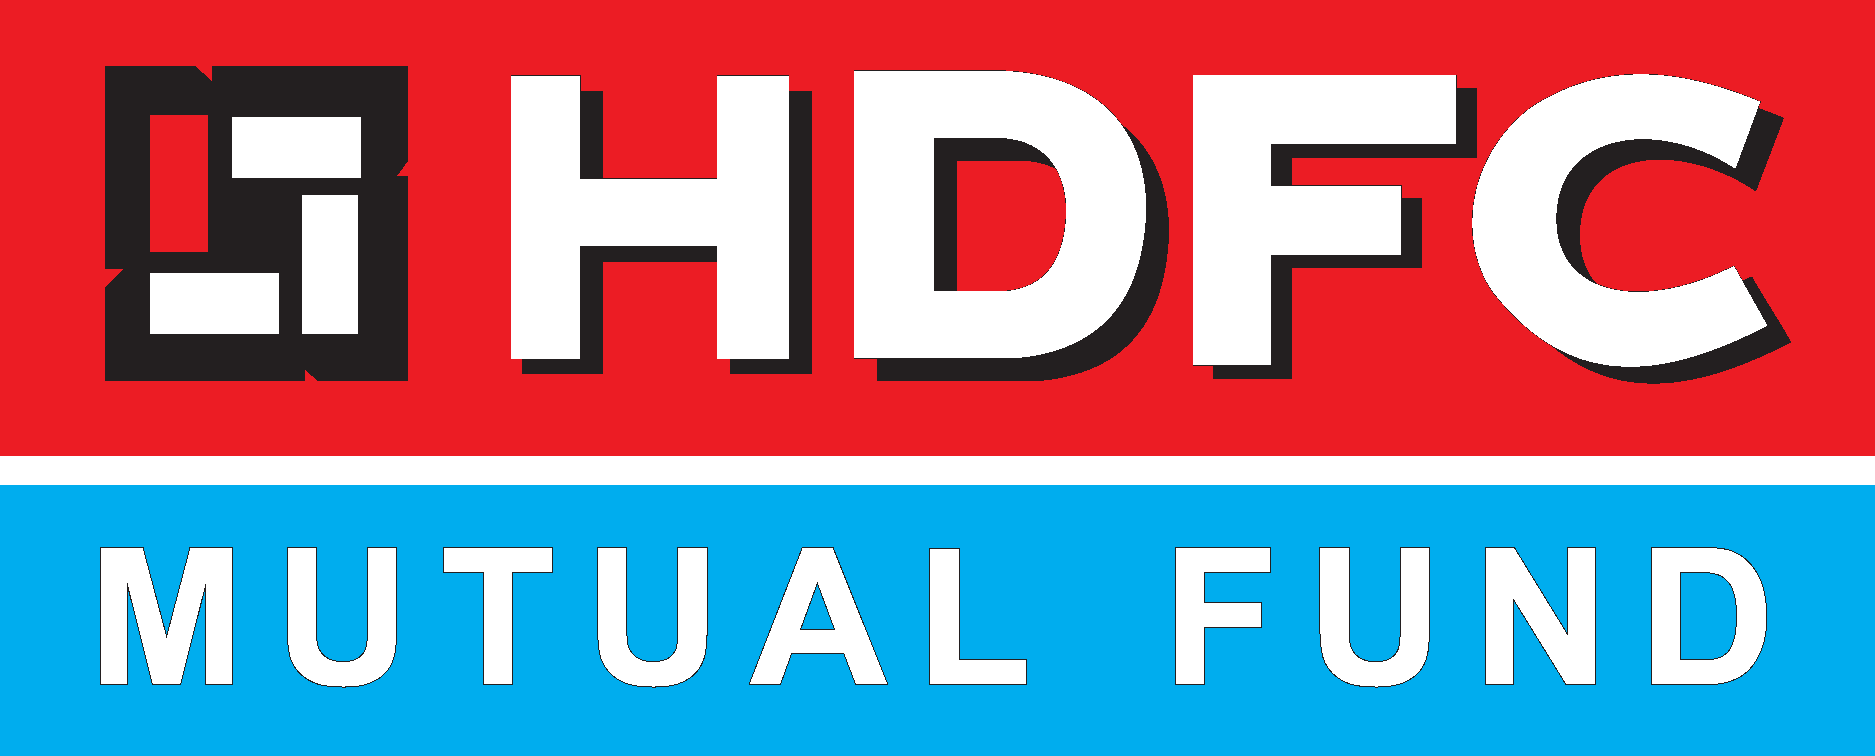 Hdfc bank logo vectors free download 71,195 editable .ai .eps .svg .cdr  files